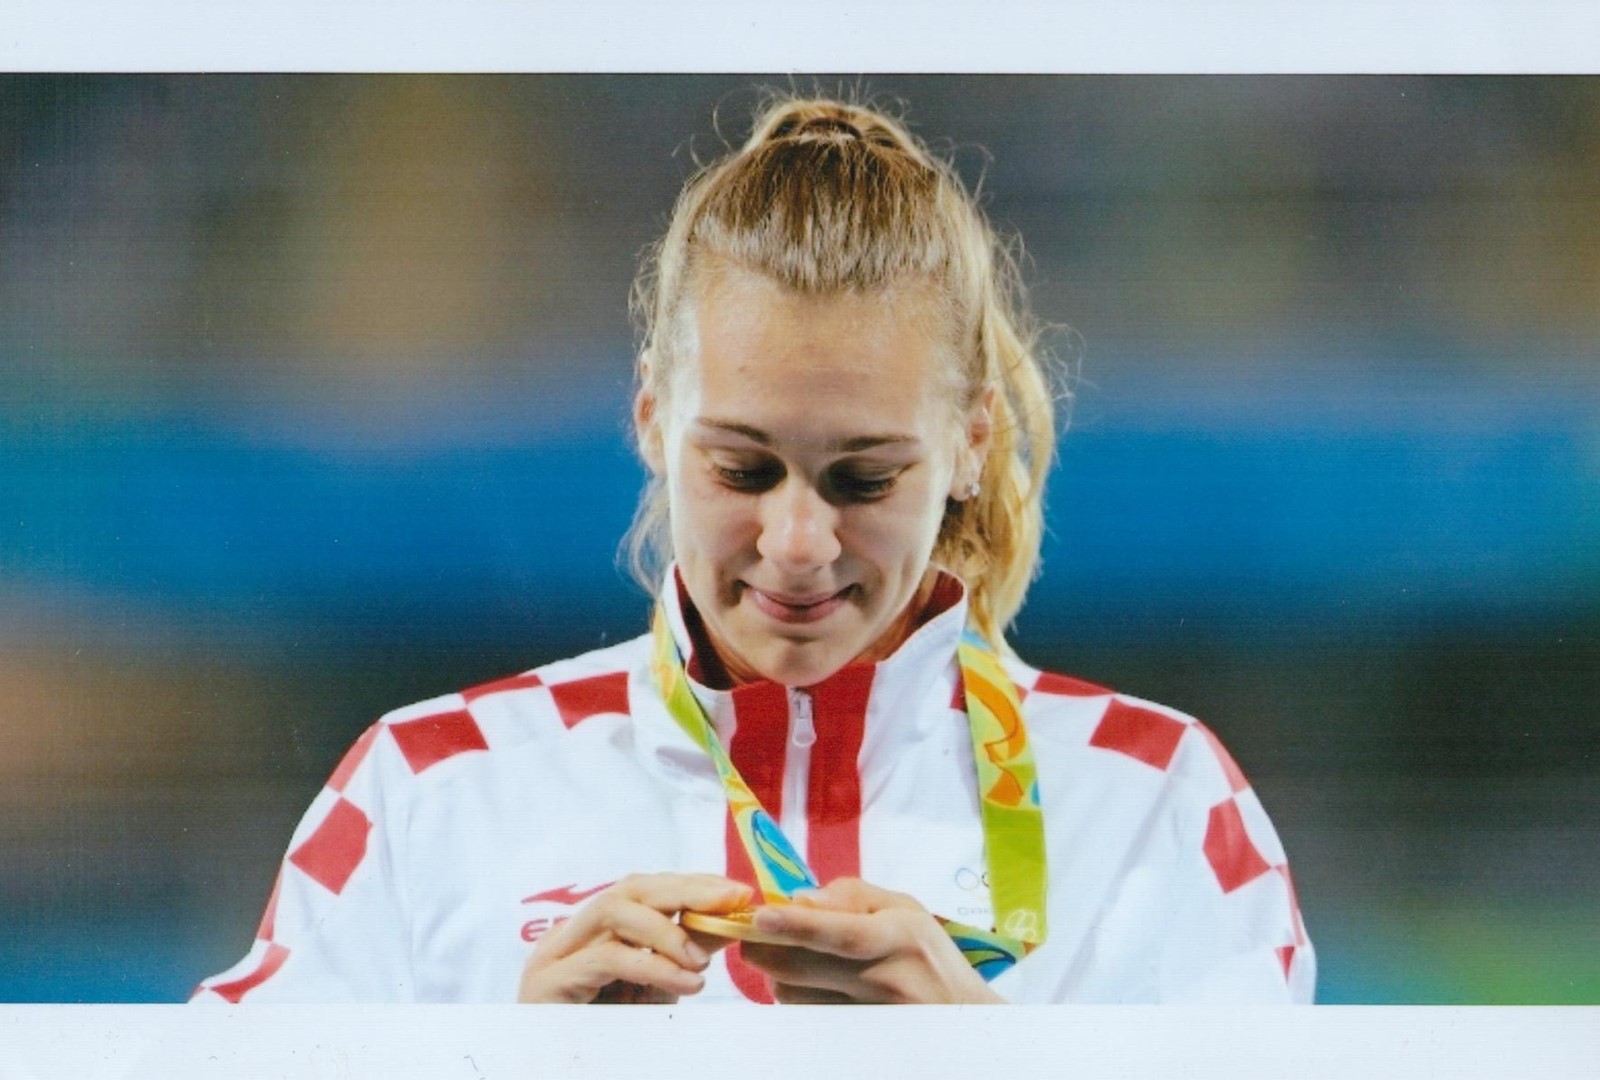 Olympics Sara Kolak signed 6x4 colour photo Gold medallist in the womens javelin event for Croatia - Image 2 of 2